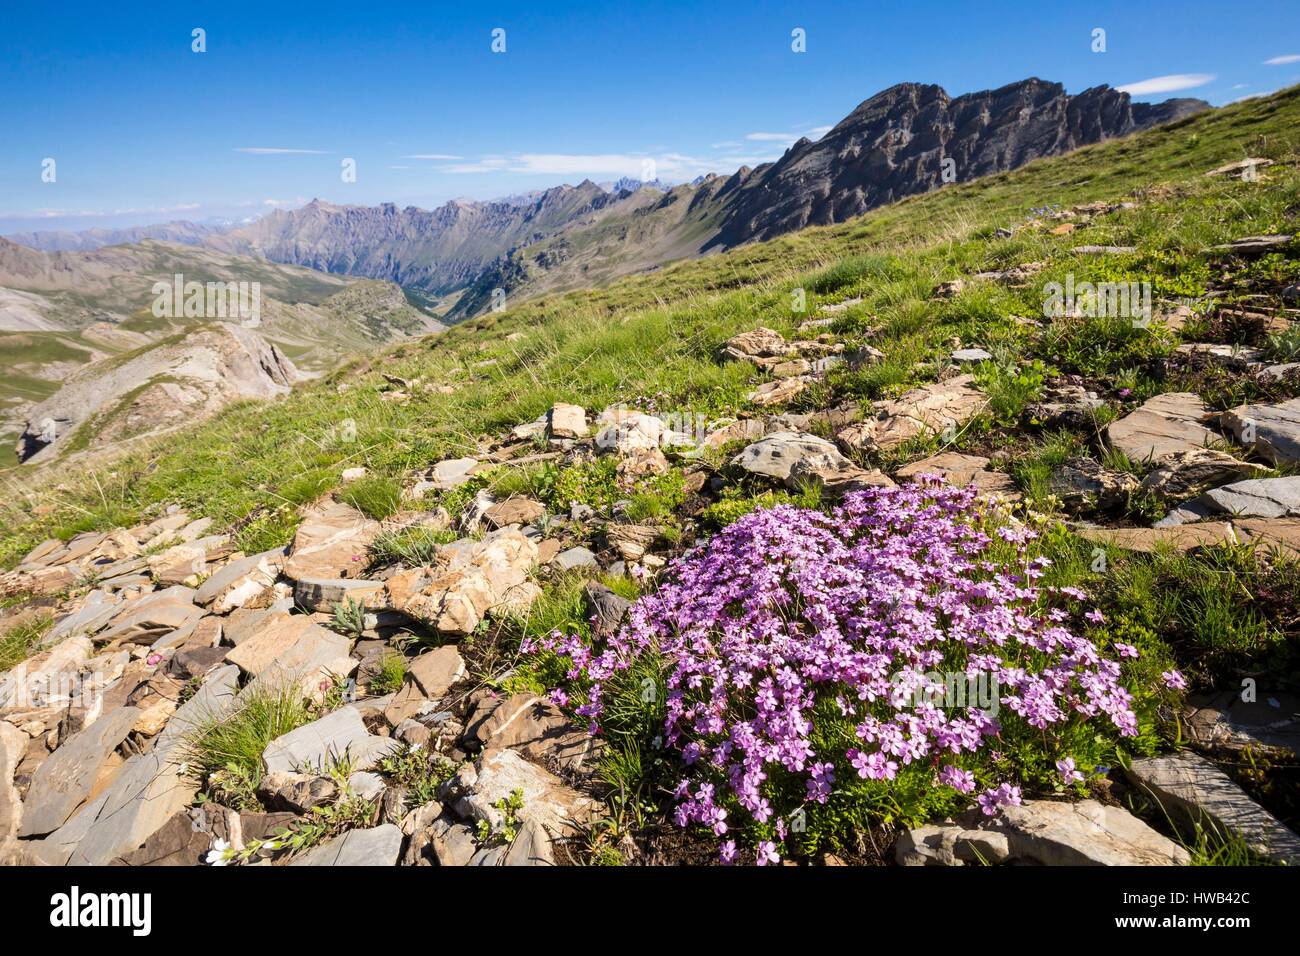 France, Alpes de Haute Provence, Mercantour National Park, Haute Hubaye, the silene acaule (silene acaulis) is a characteristic plant of the alpine spaces Stock Photo